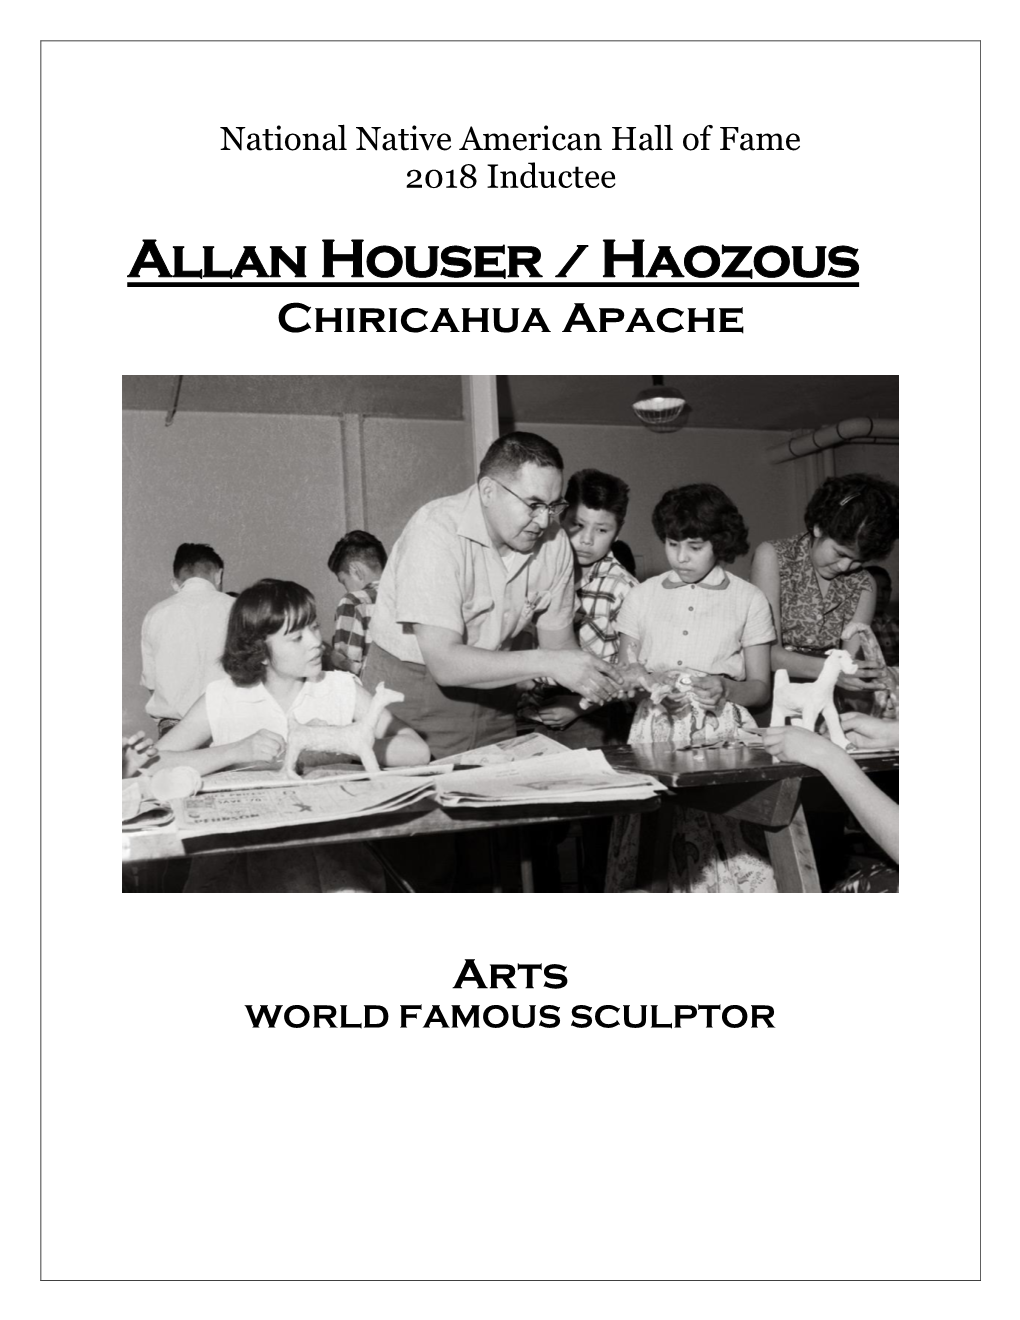 Allan Houser / Haozous